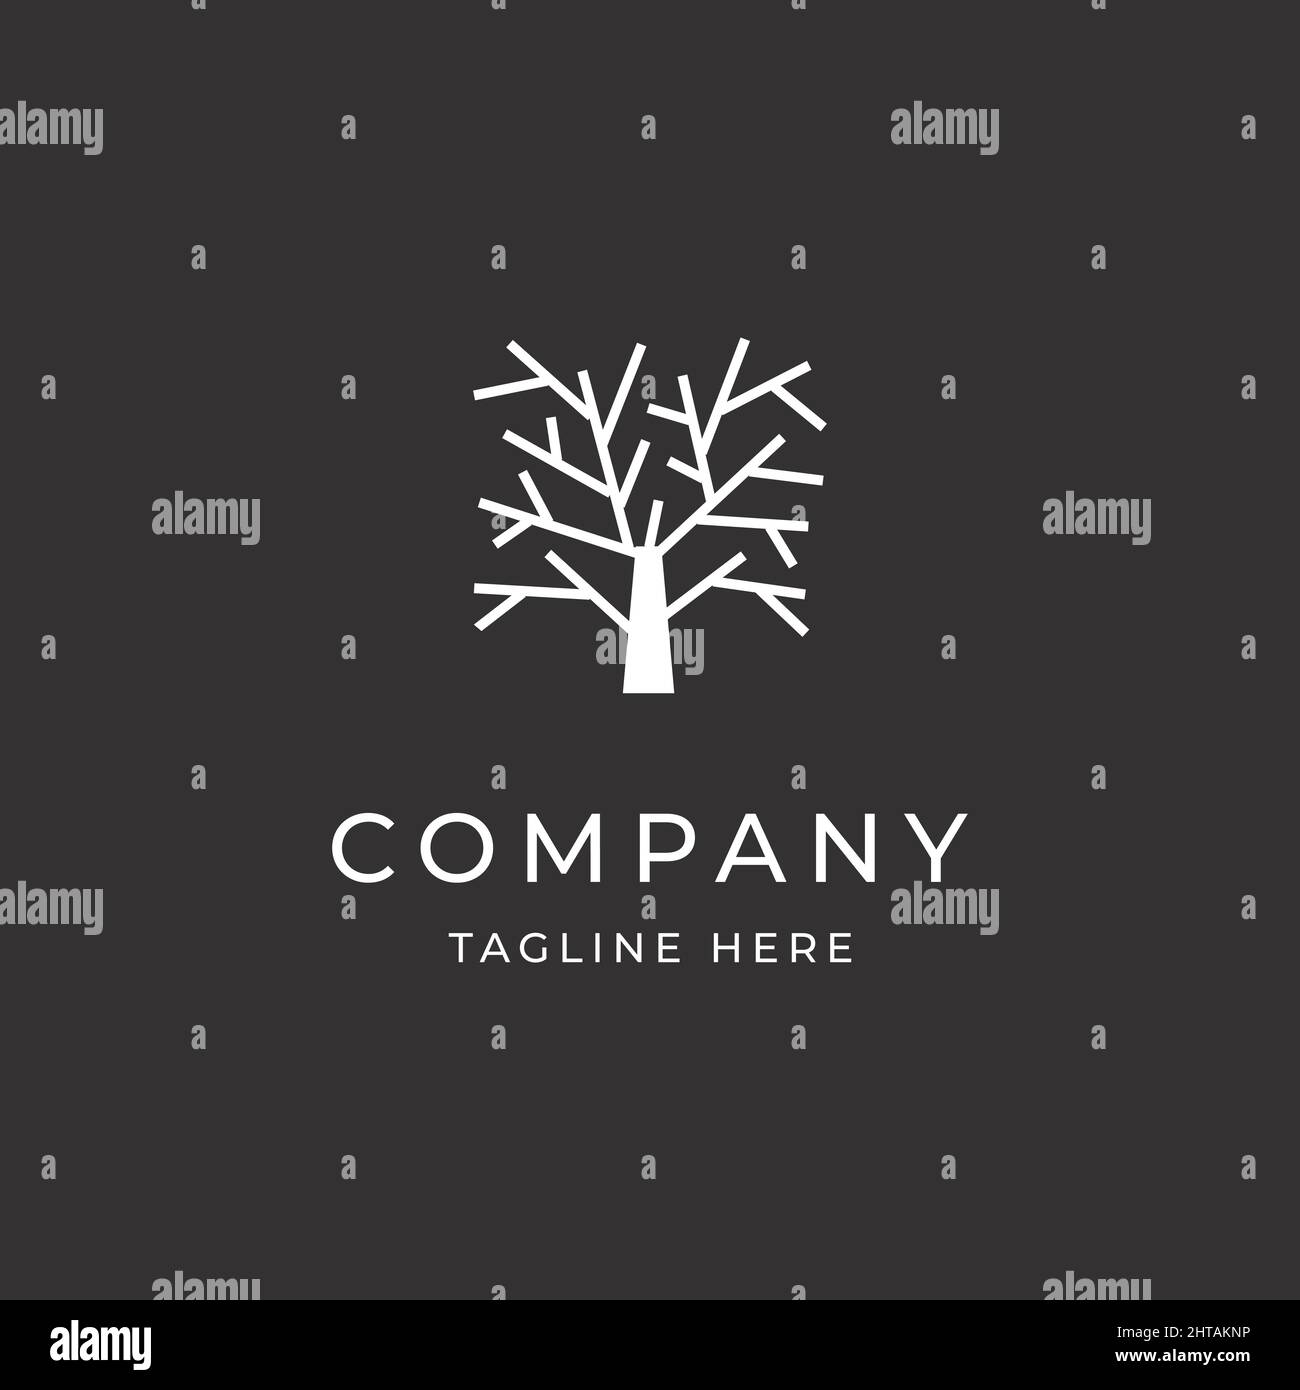 Old tree logo design illustration vector template. Premium tree logo design icon vector template. Branch icon illustration Stock Vector